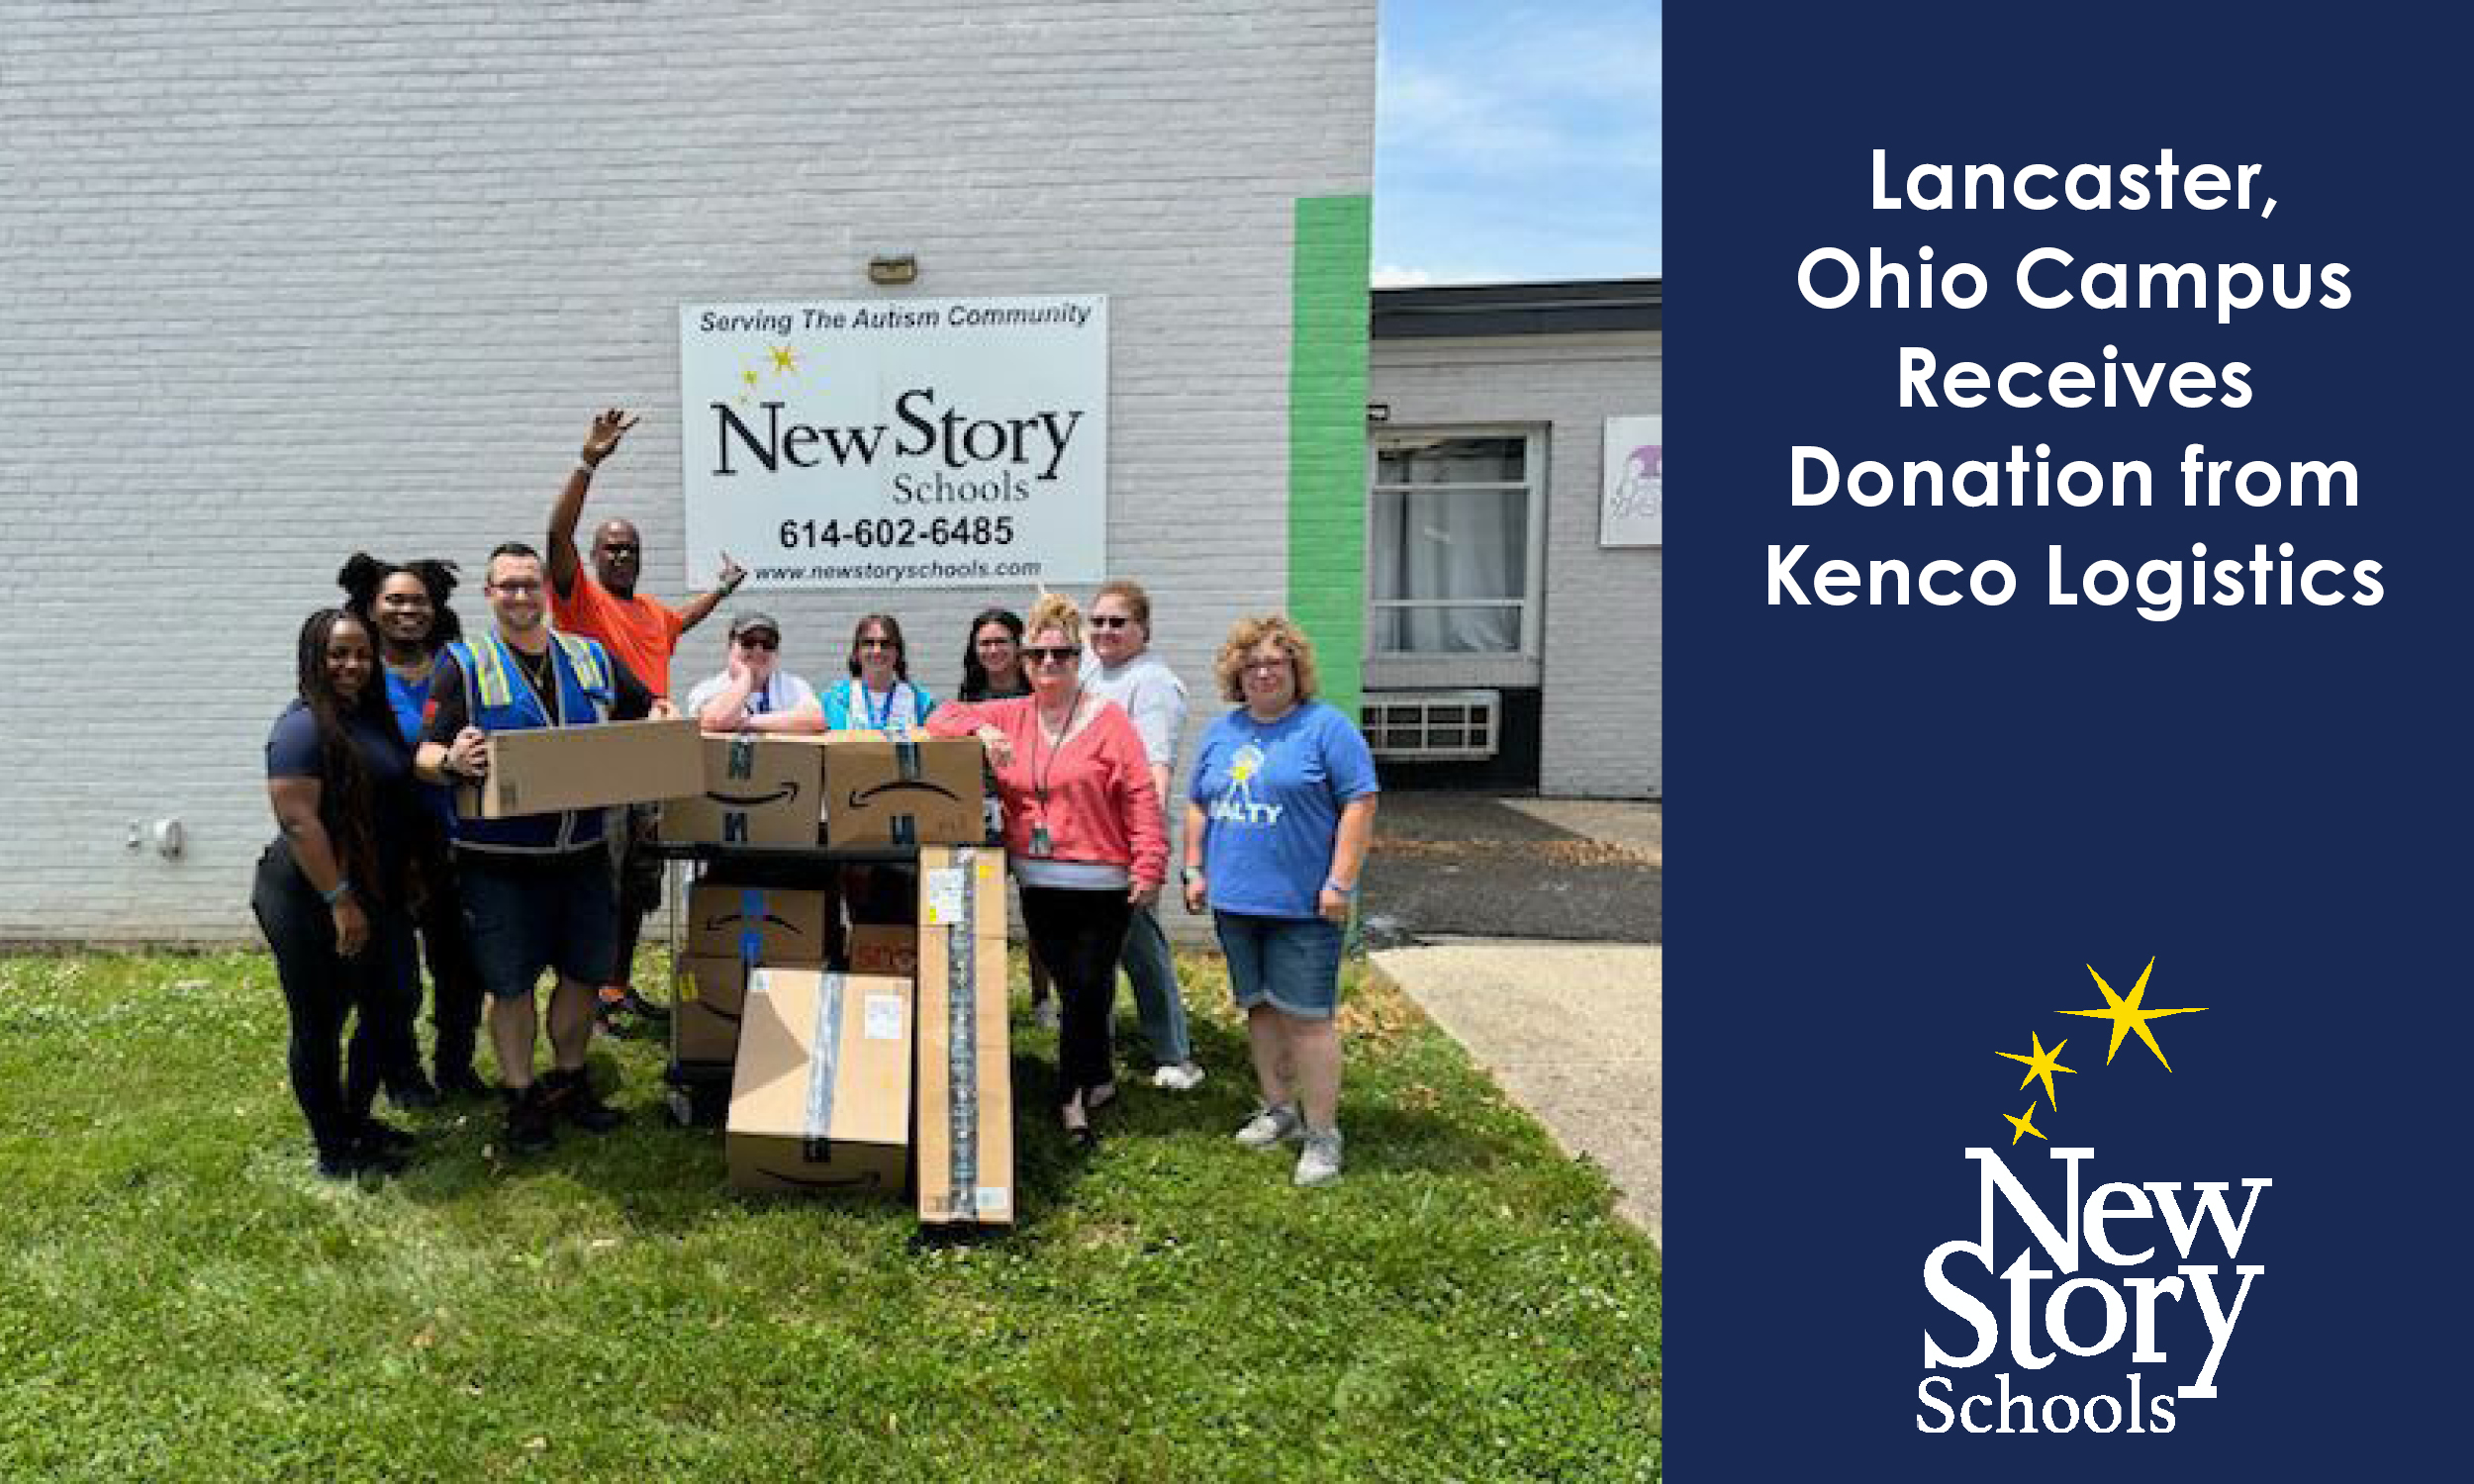 Lancaster, Ohio Campus Receives Donation from Kenco Logistics